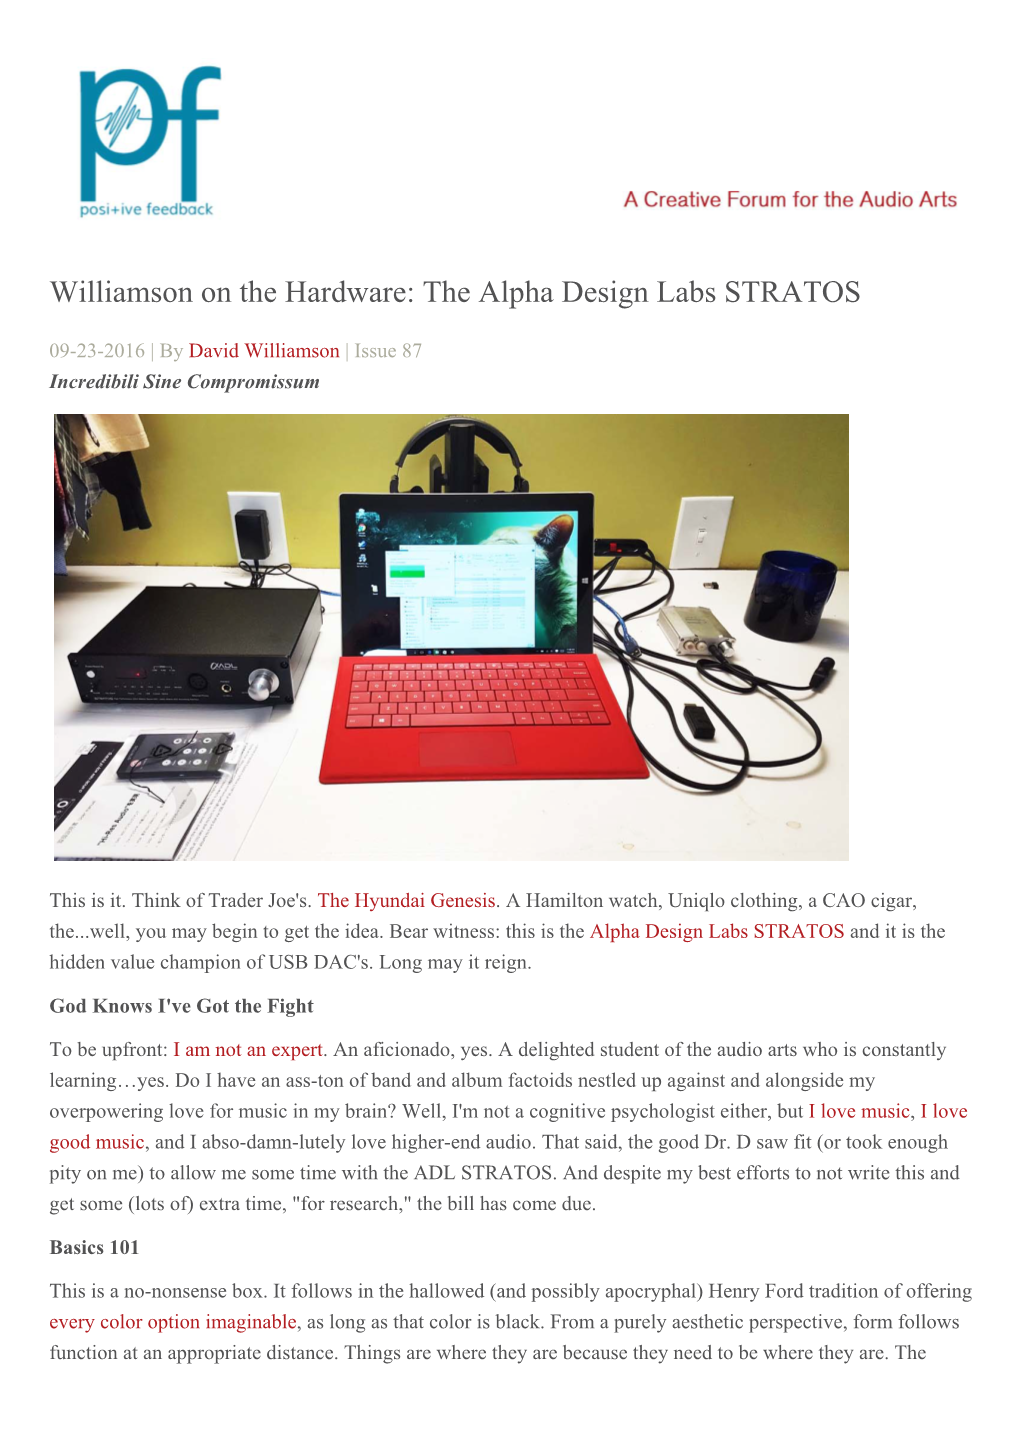 Williamson on the Hardware: the Alpha Design Labs STRATOS